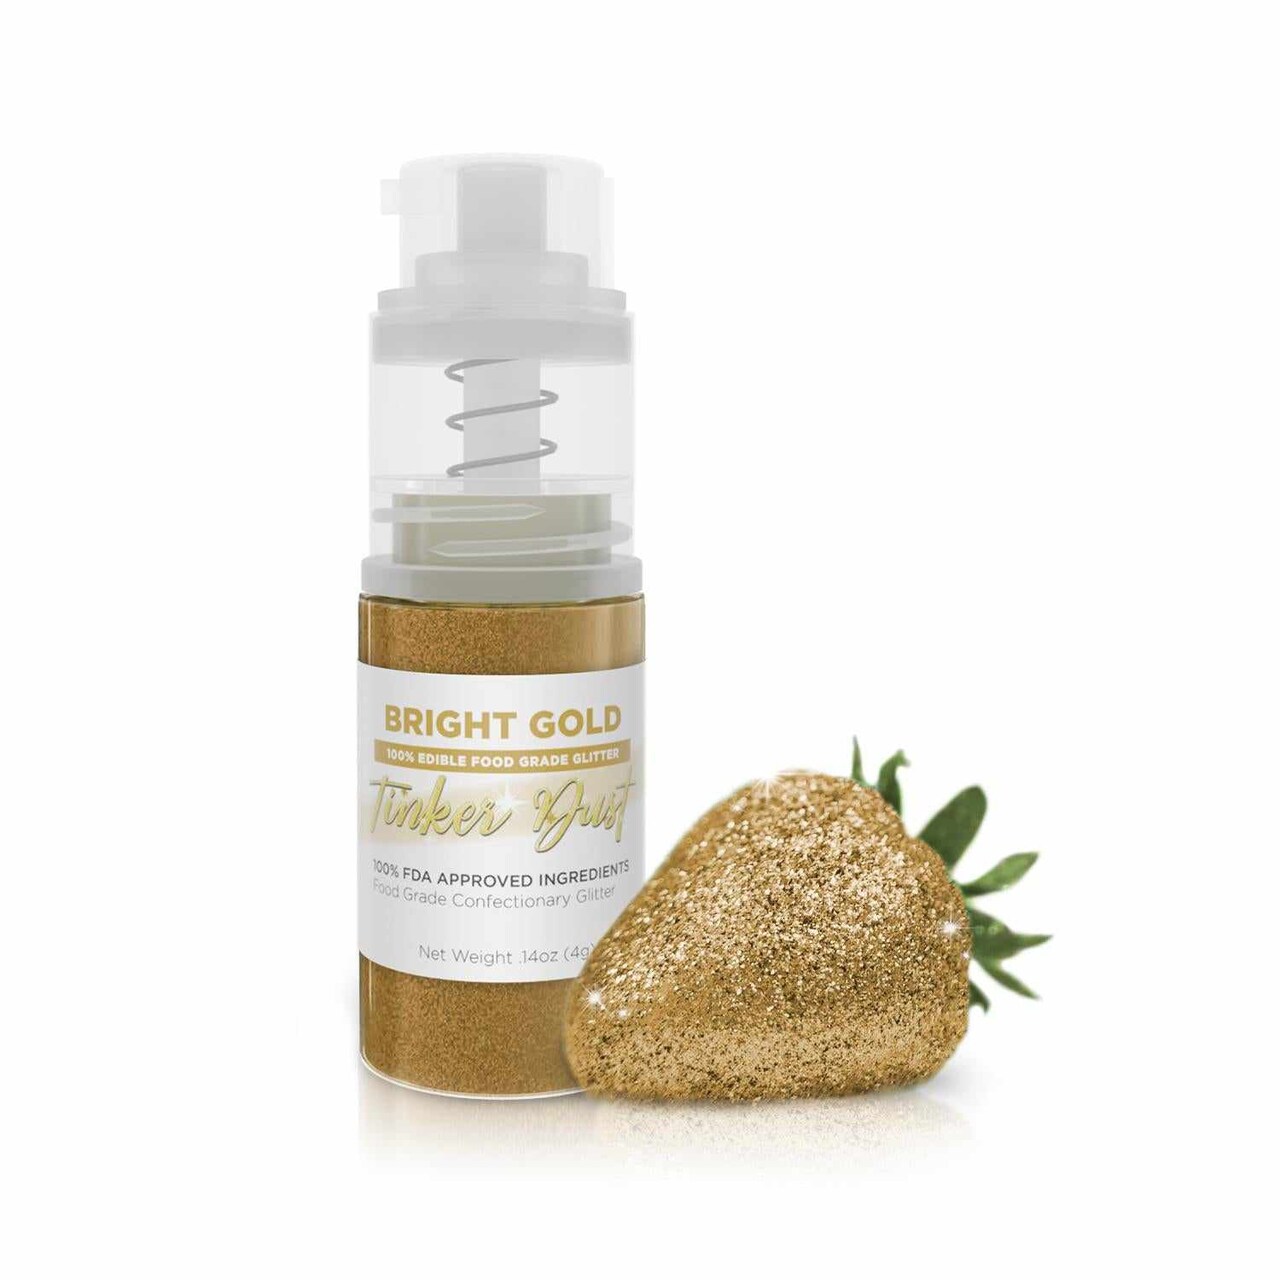 Bright Gold Edible Glitter Spray - Edible Powder Dust Spray Glitter for  Food, Drinks, Strawberries, Muffins, Cake Decorating. FDA Compliant (4 Gram  Pump)